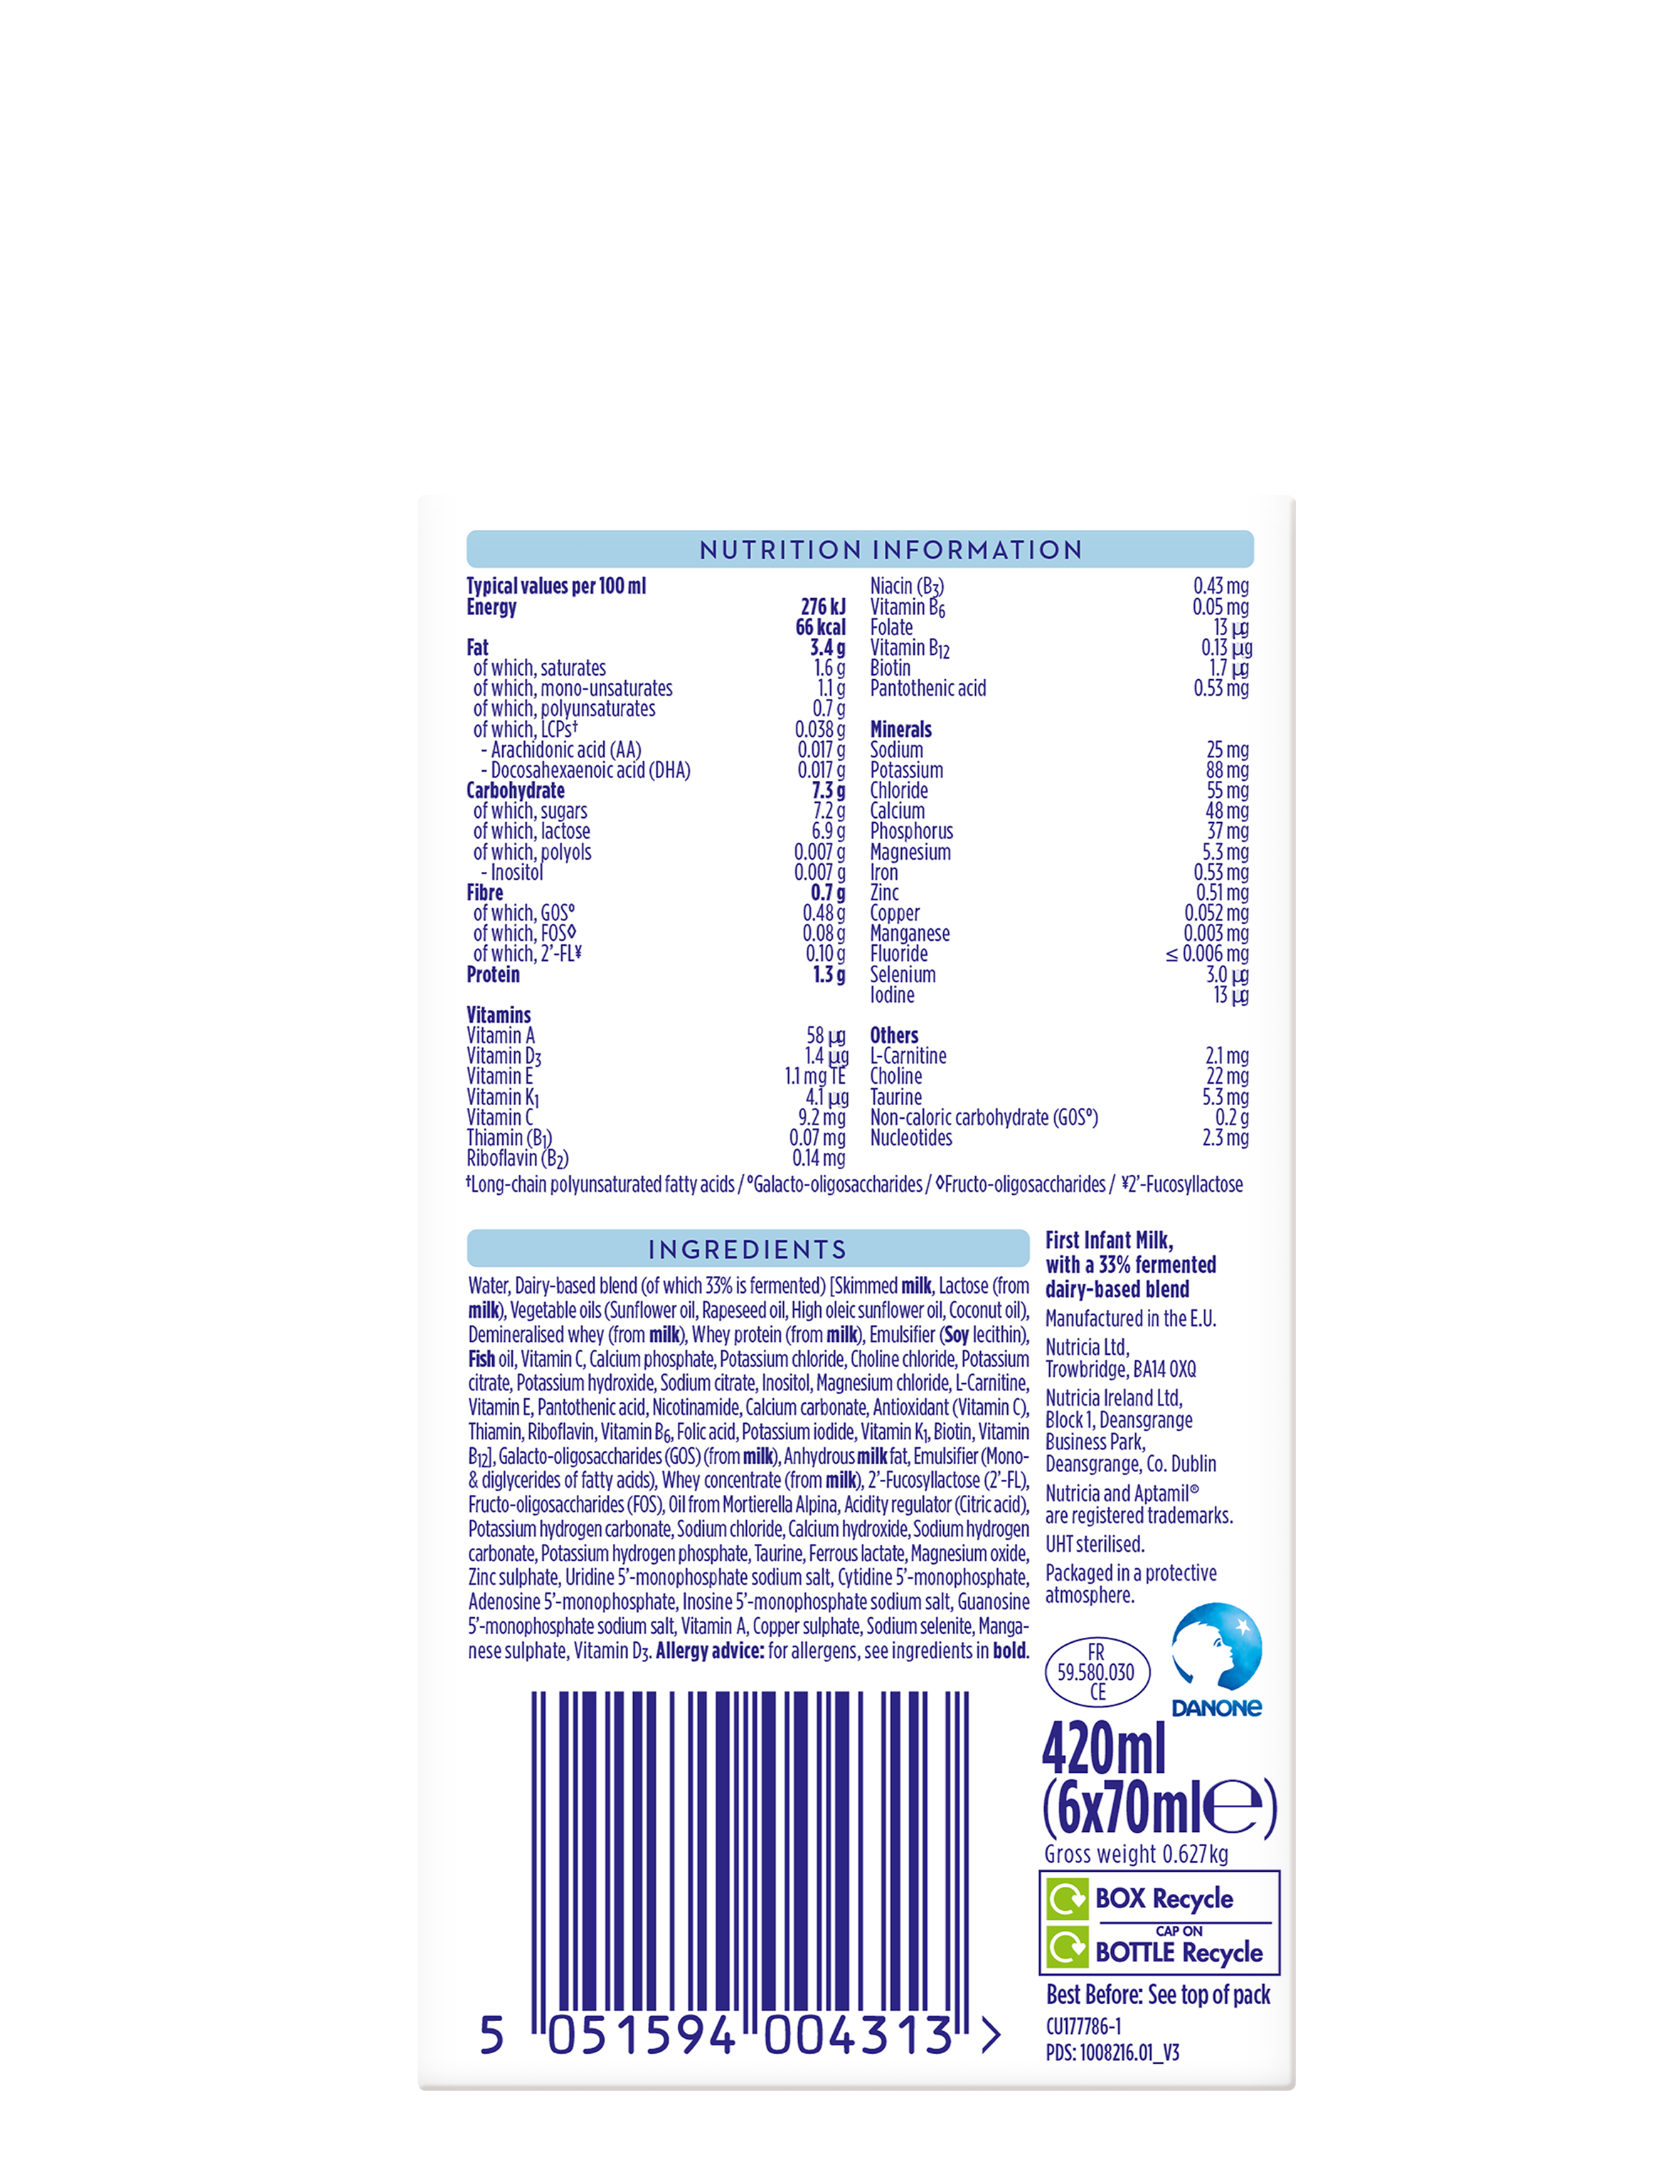 Aptamil® Advanced First Infant Milk Starter Pack 6x70ml